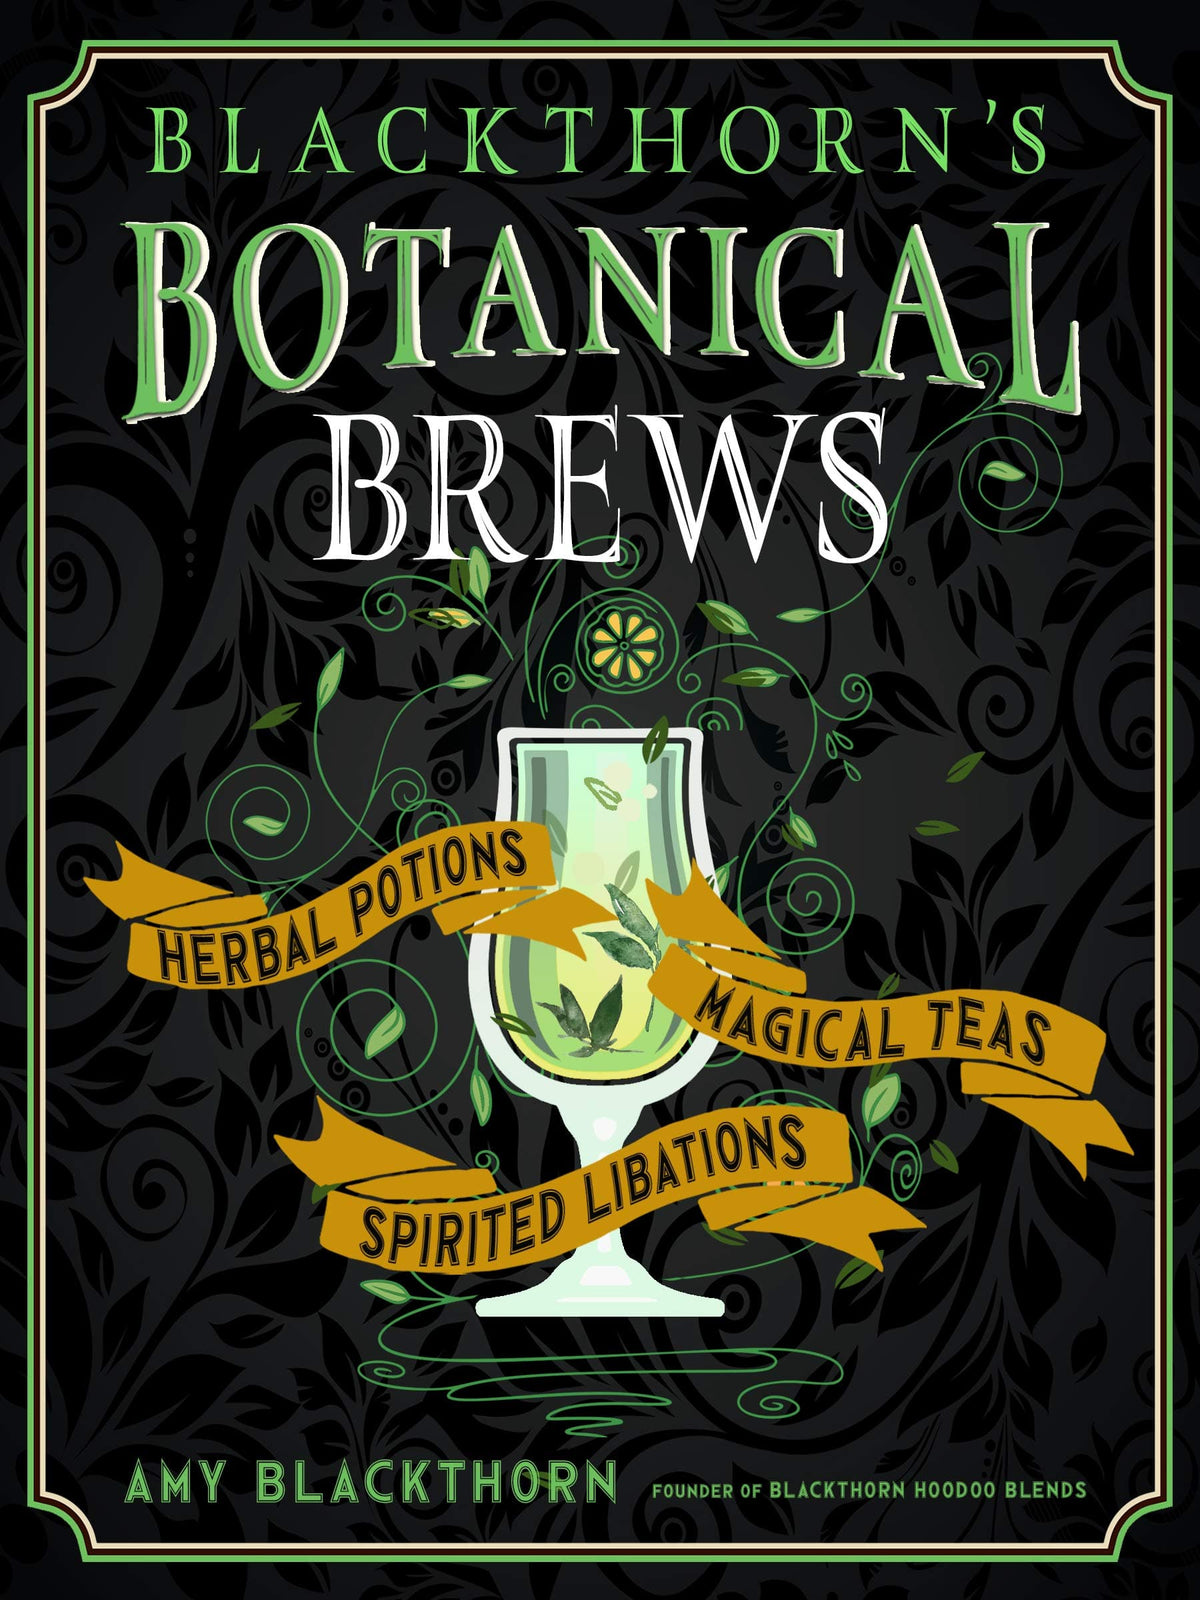 Blackthorn's Botanical Brews: Herbal Potions, Magical Teas, and Spirited Libations HC - Third Eye